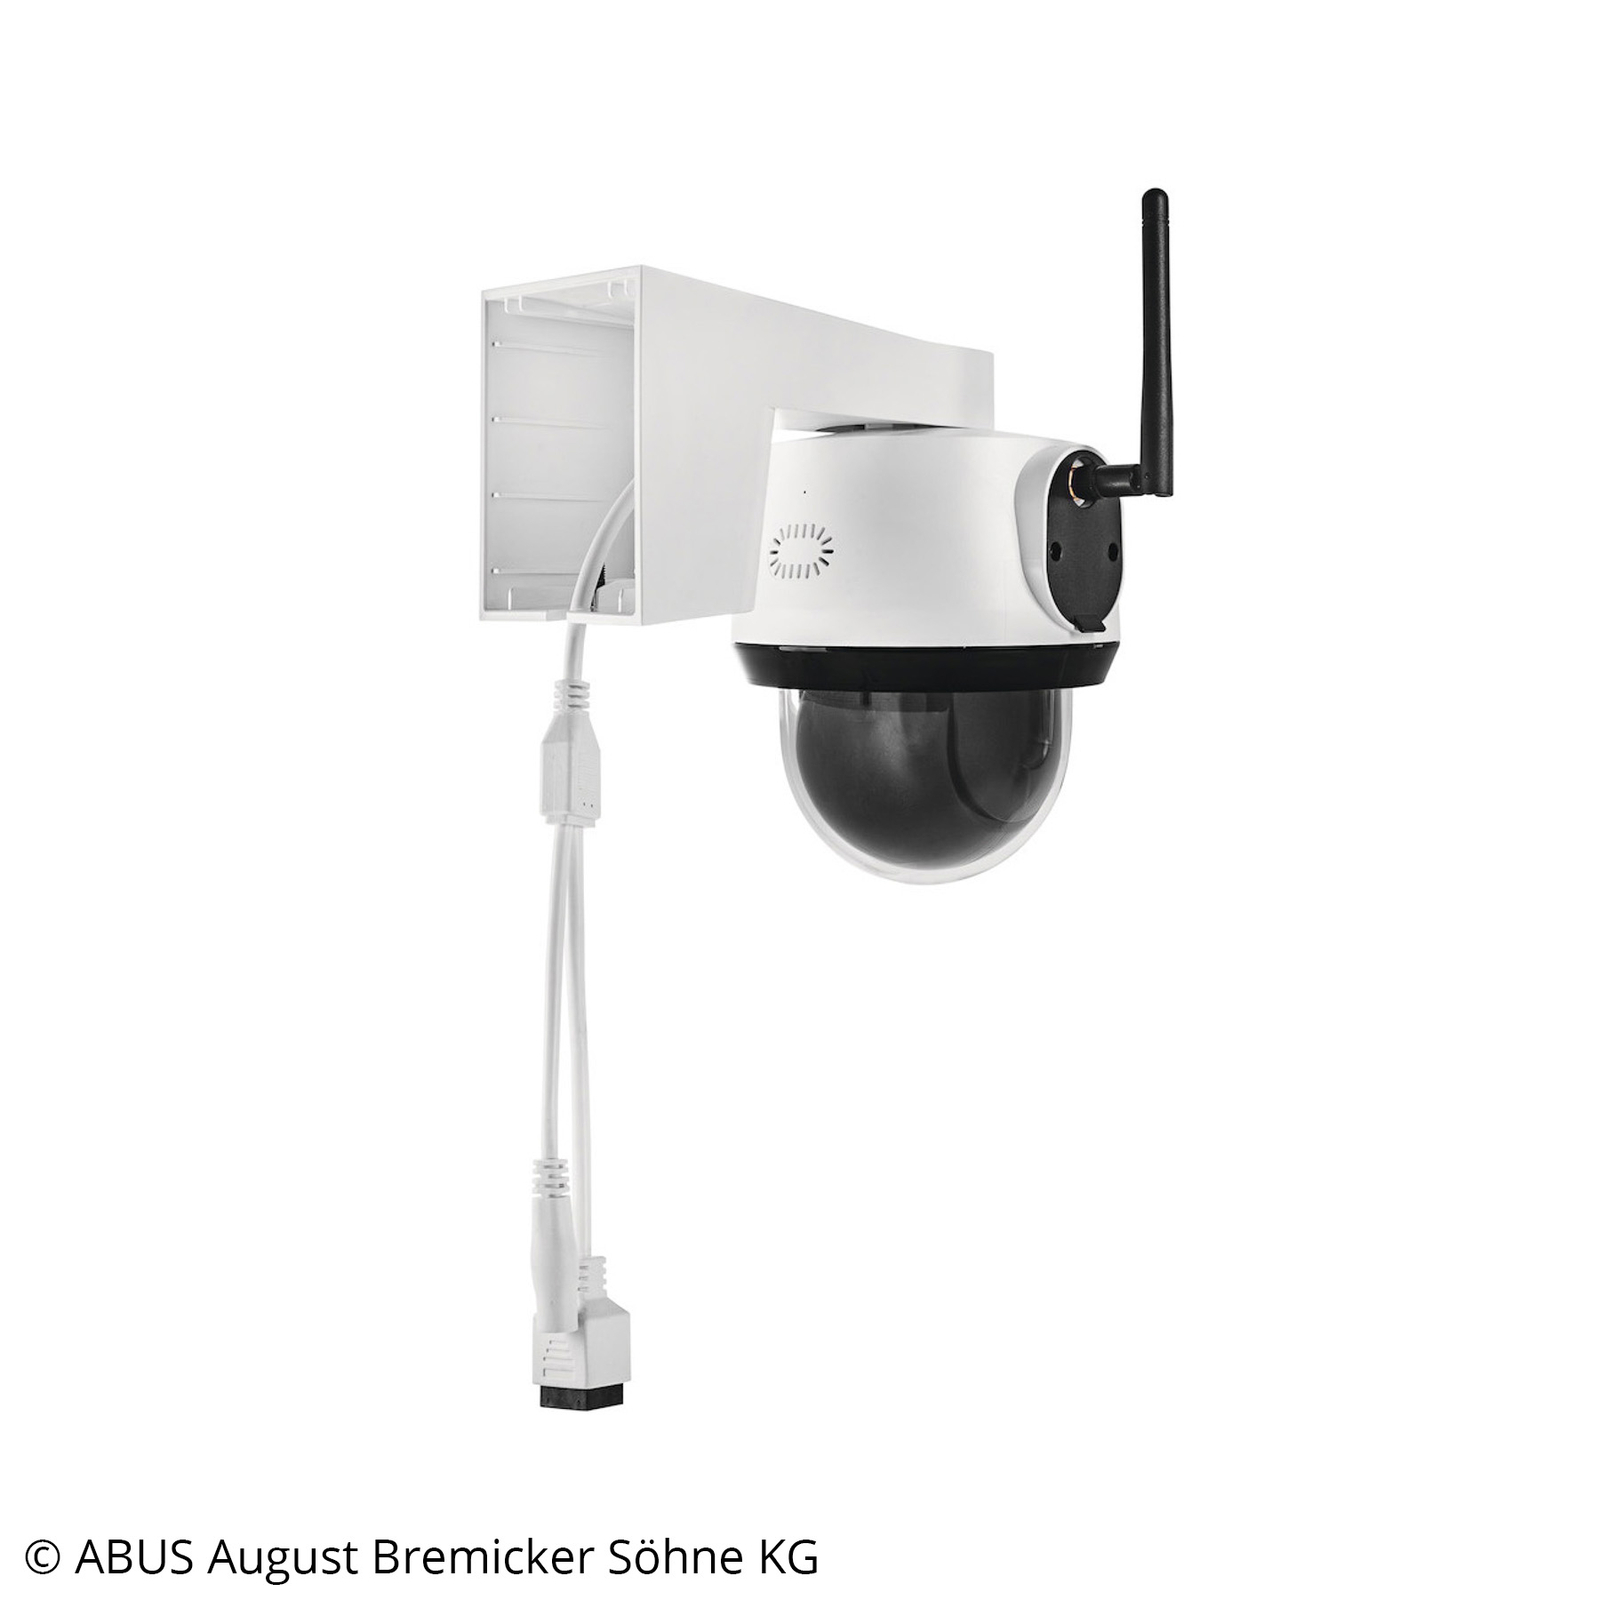 ABUS PPIC42520 WiFi camera pivotable/tiltable IP66